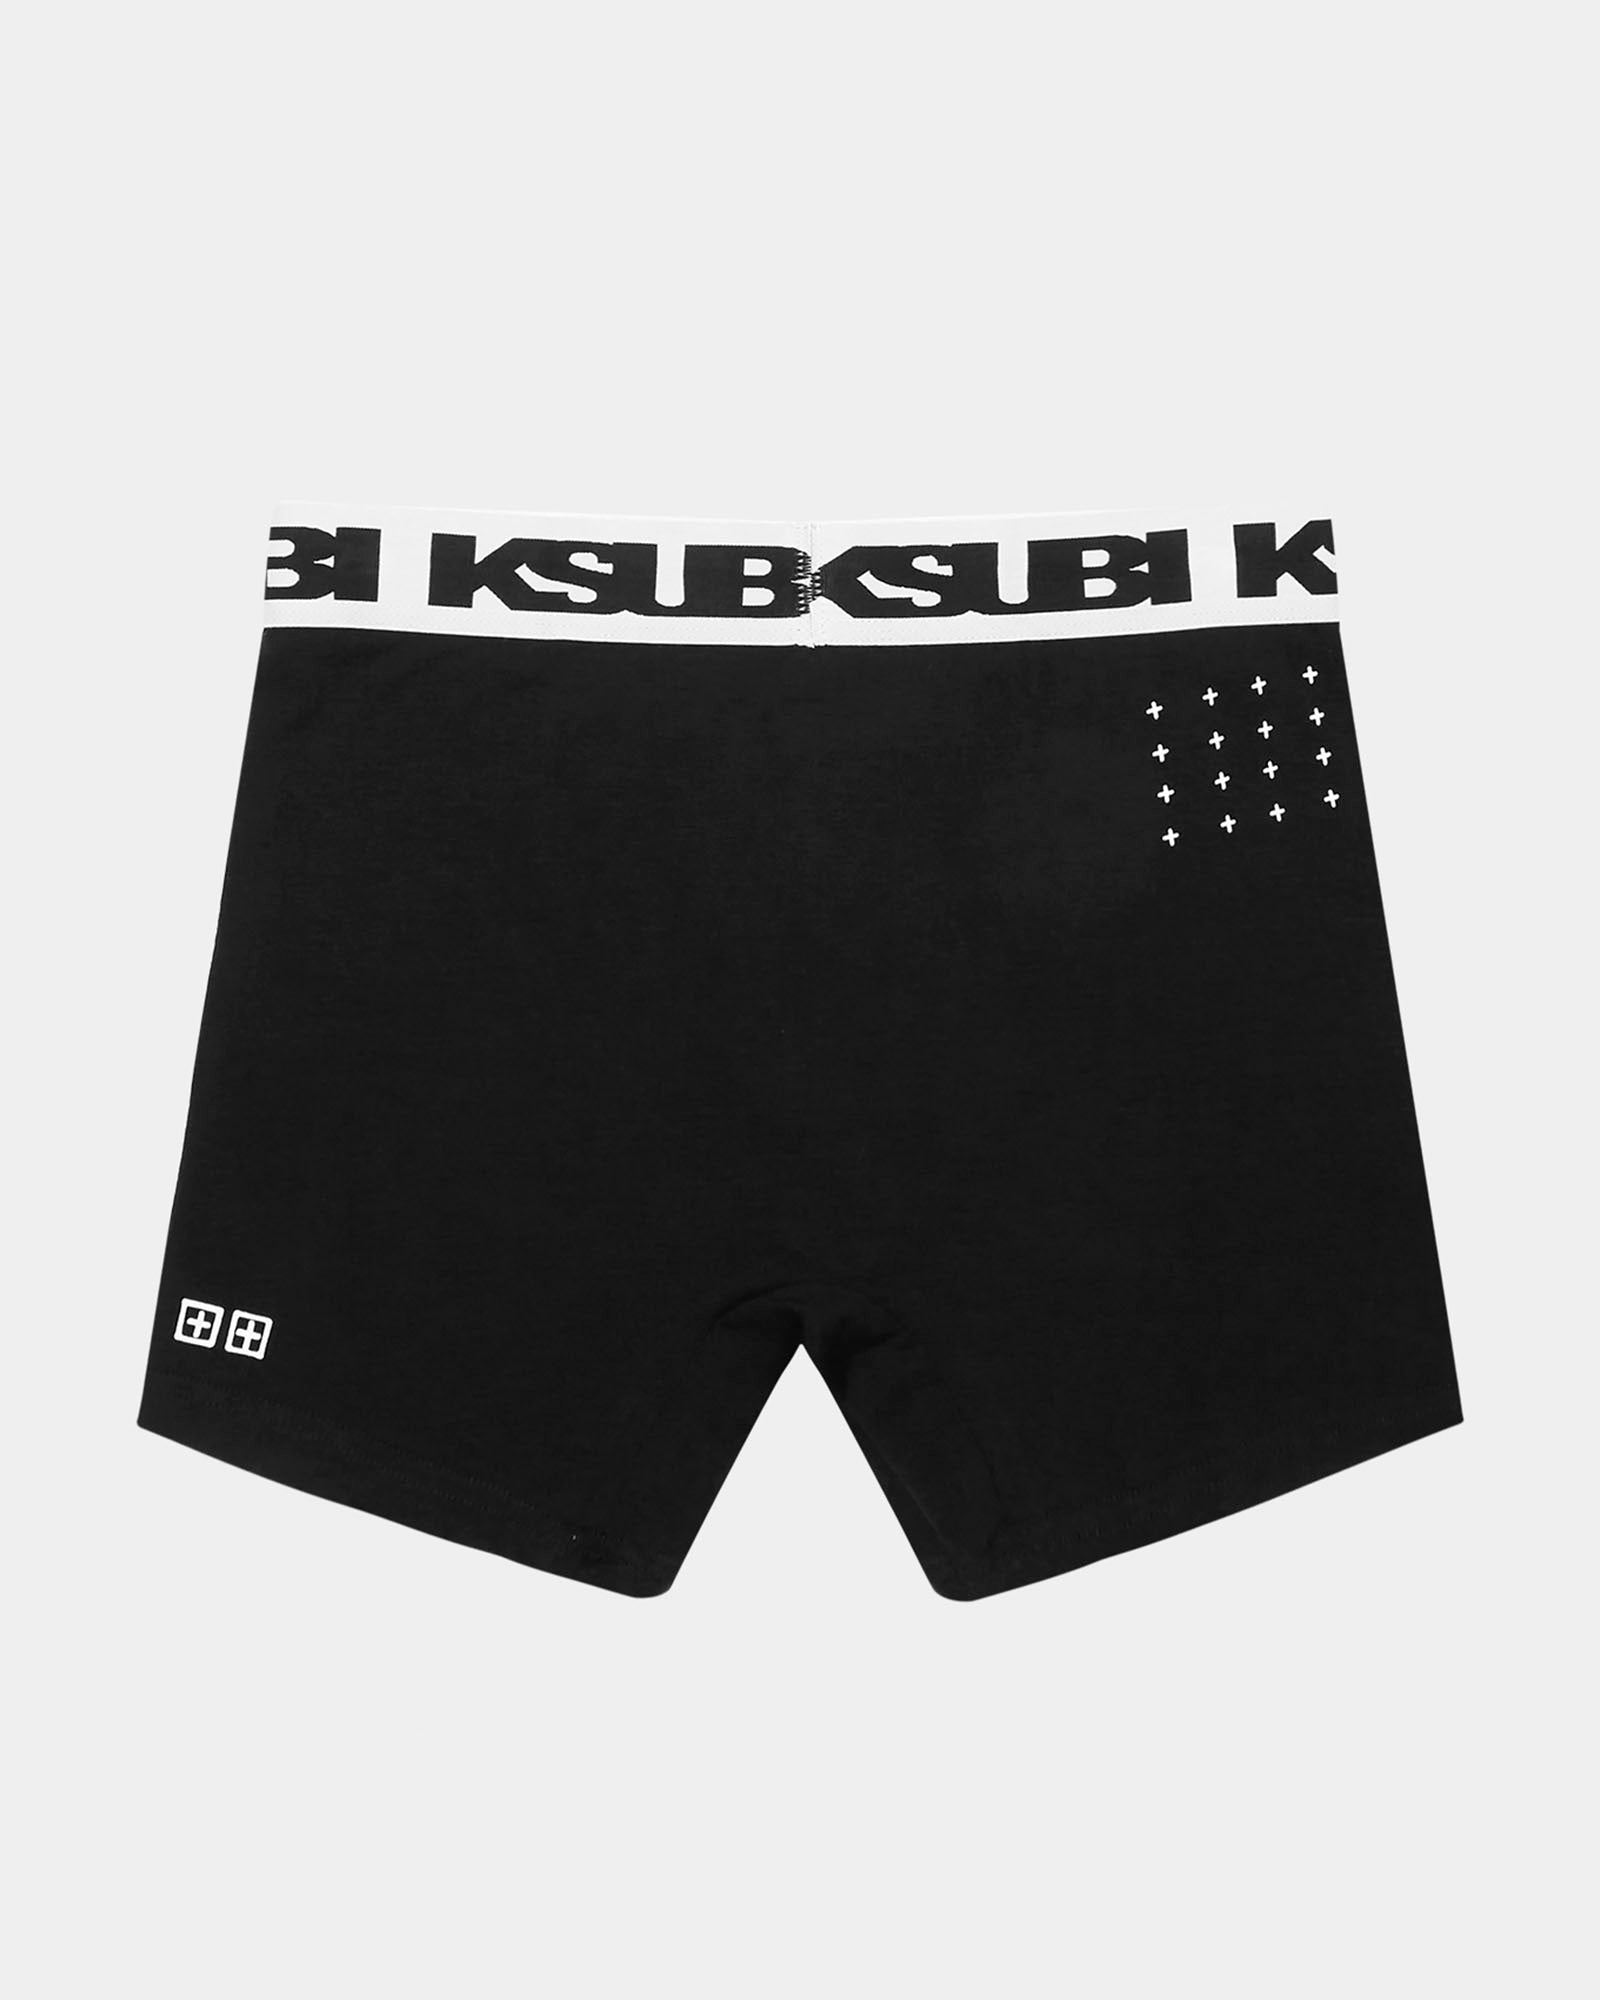 Royalty Boxer Brief Underwear 3 Pack - Black